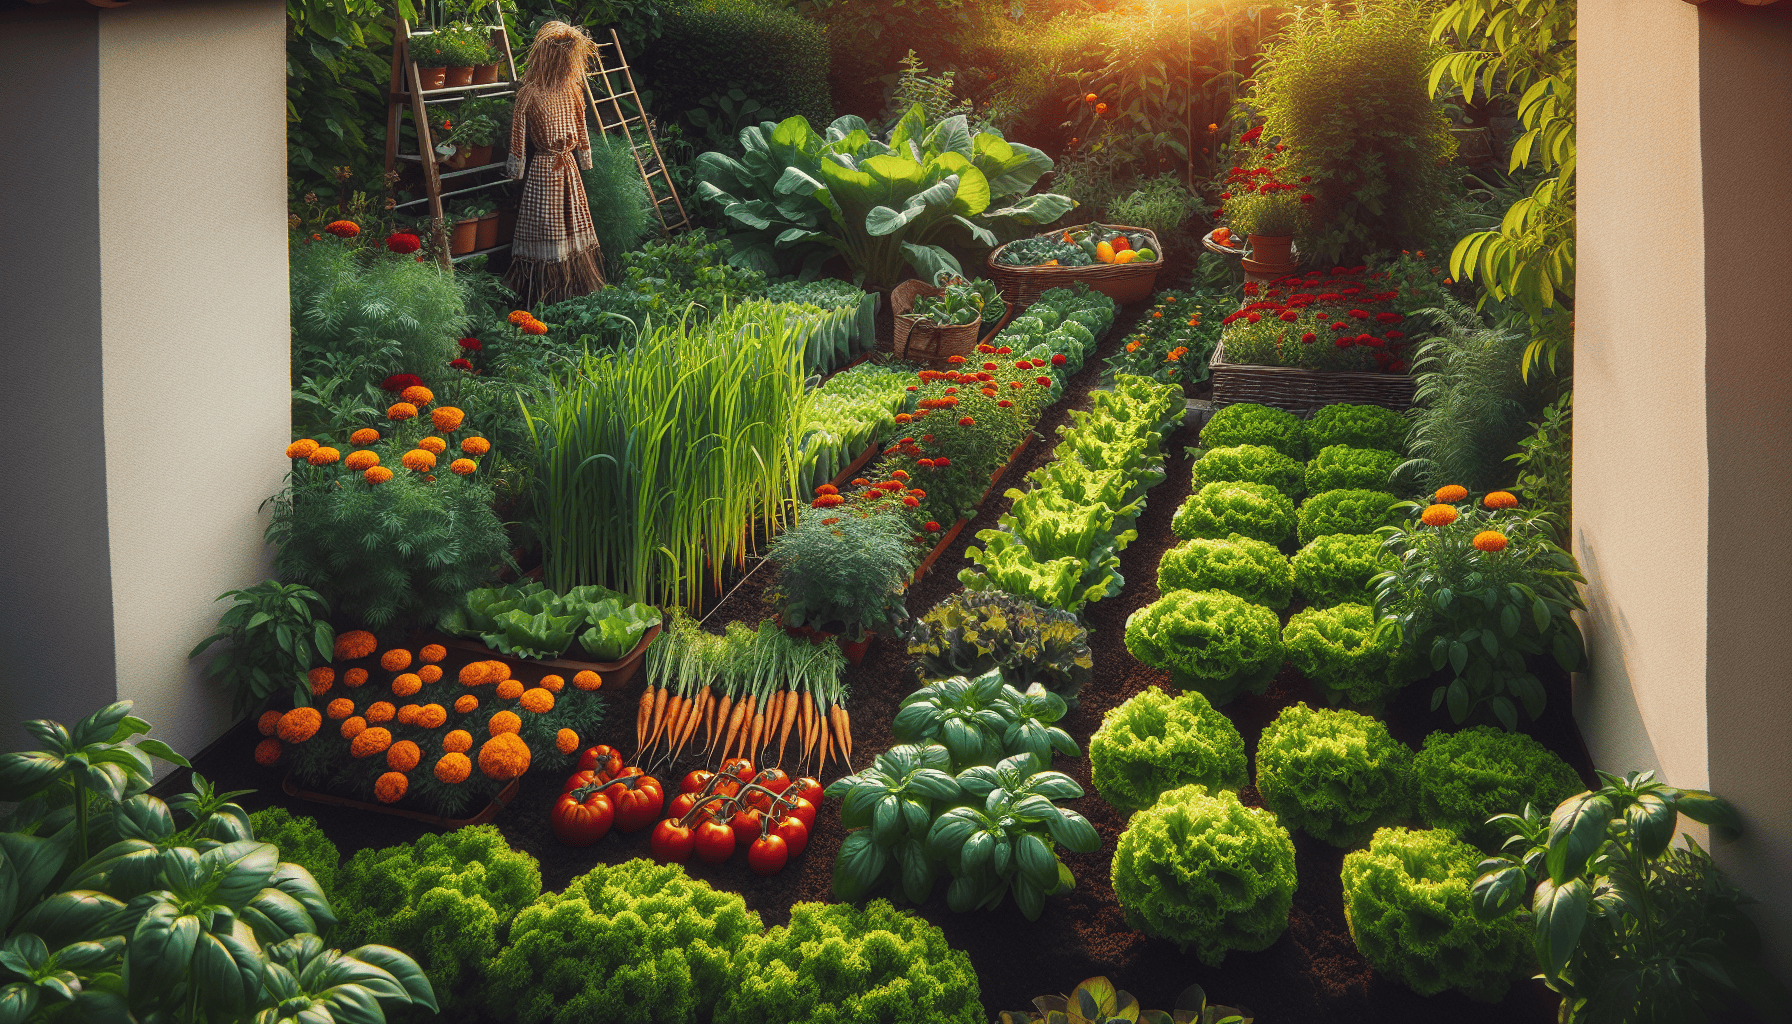 Companion planting in a vegetable garden